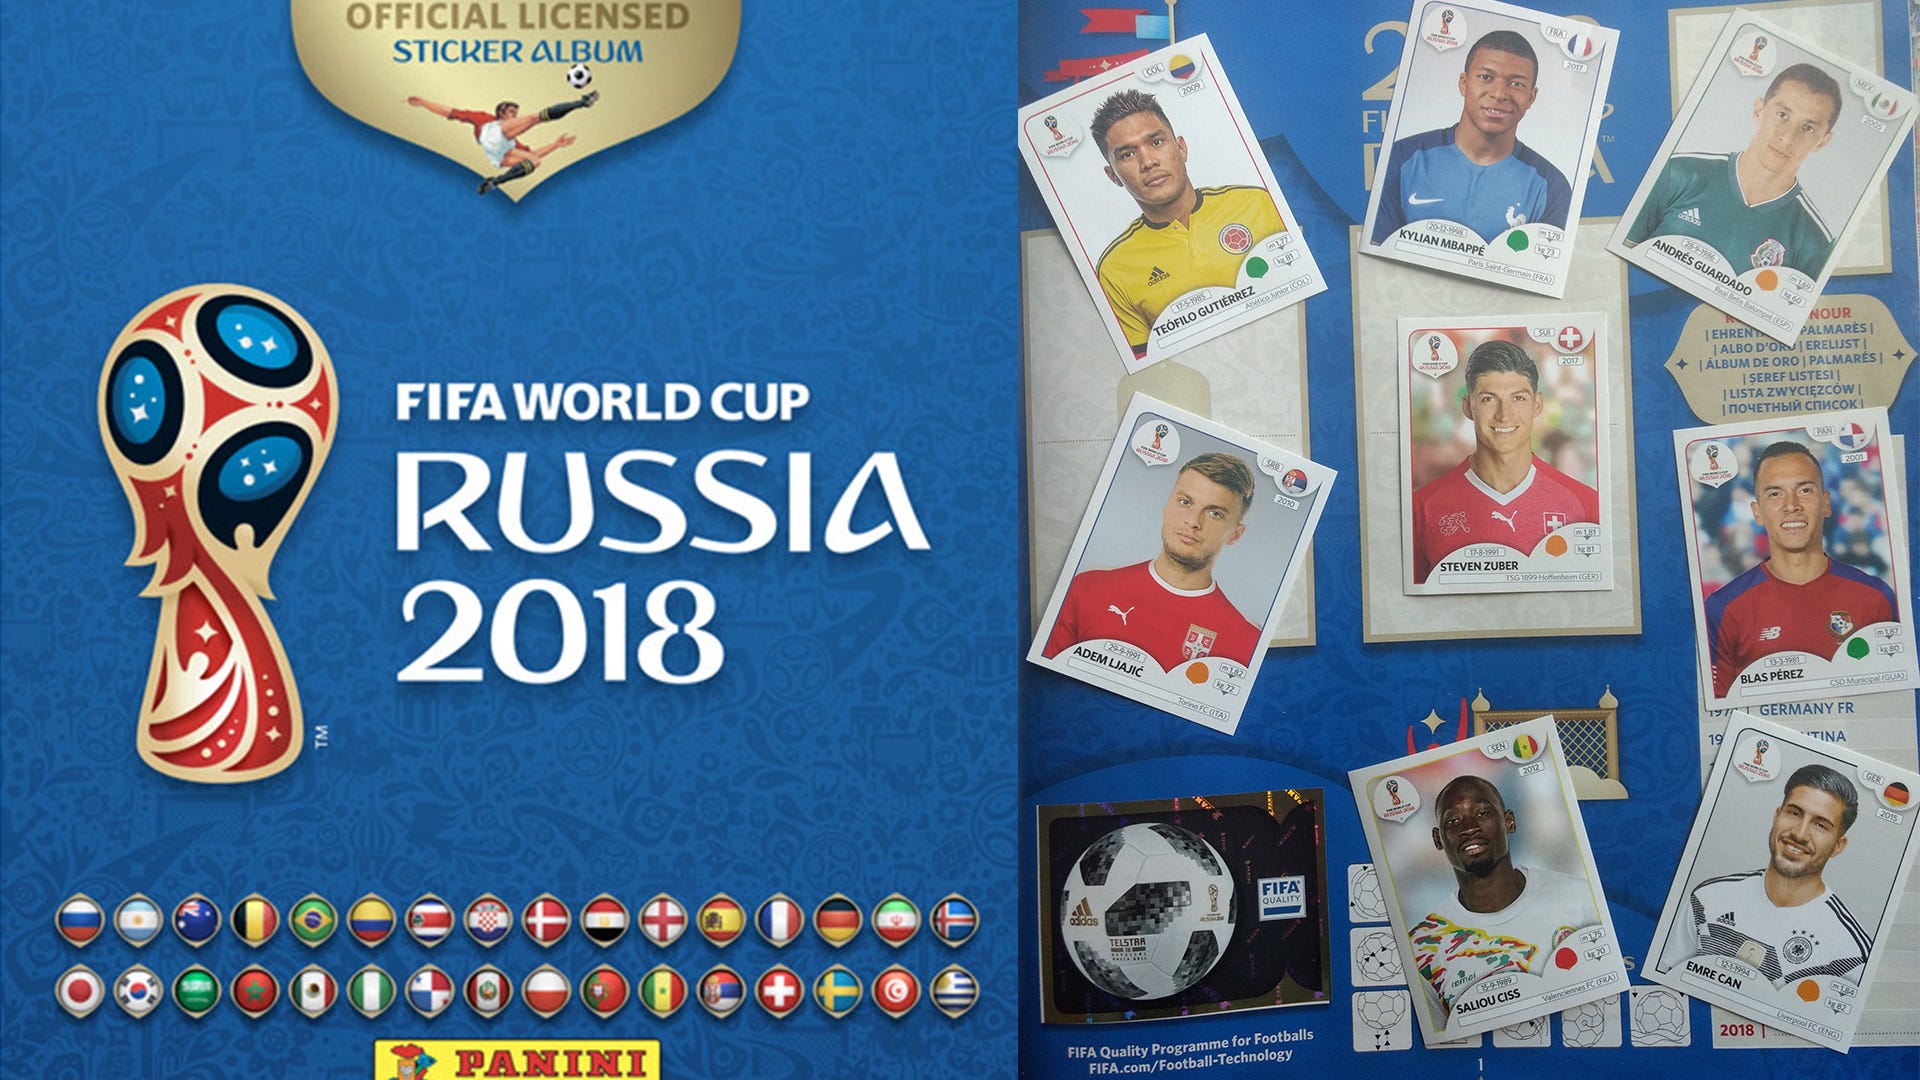 Danijel Subaši Panini World Cup 2018 Russia 314 Croatia No 